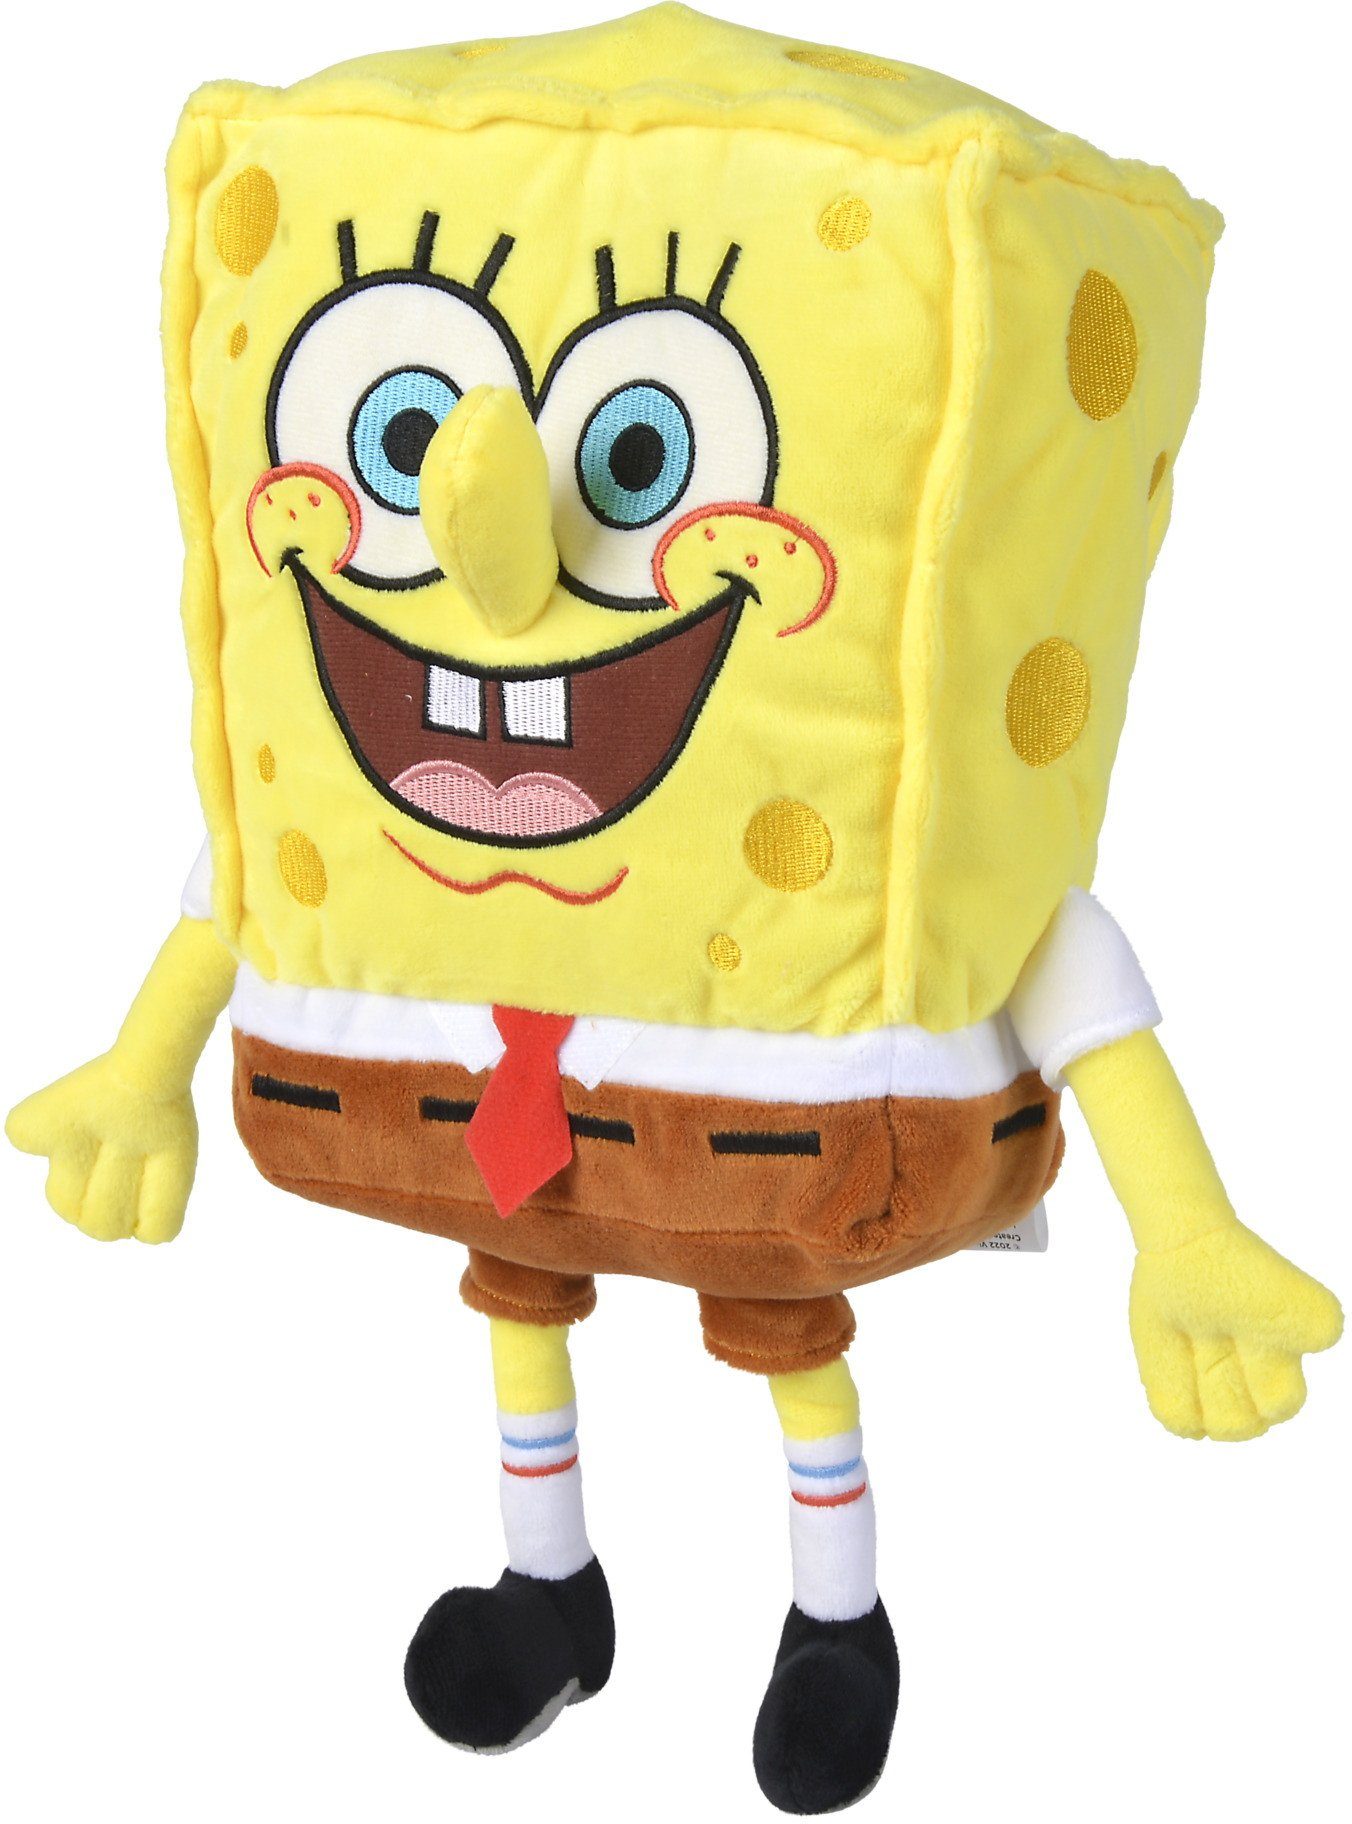 SIMBA Plüschfigur Plüsch Stofftier Spongebob Spongebob Plüsch 35cm 109491000